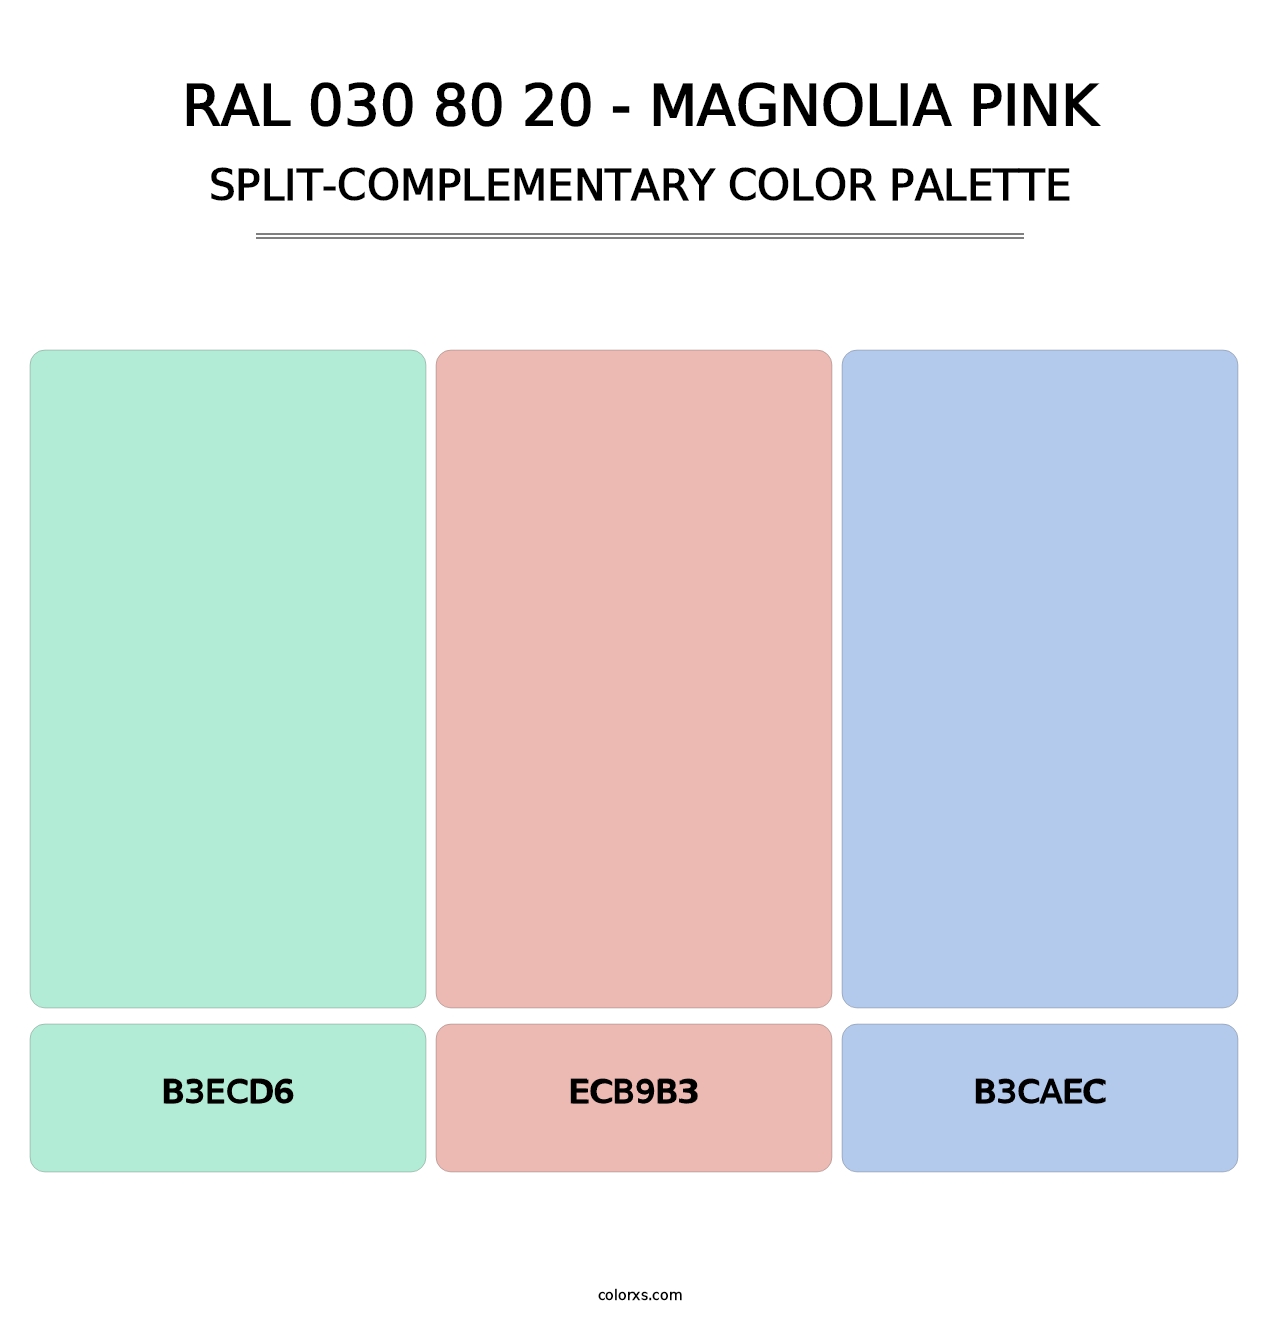 RAL 030 80 20 - Magnolia Pink - Split-Complementary Color Palette